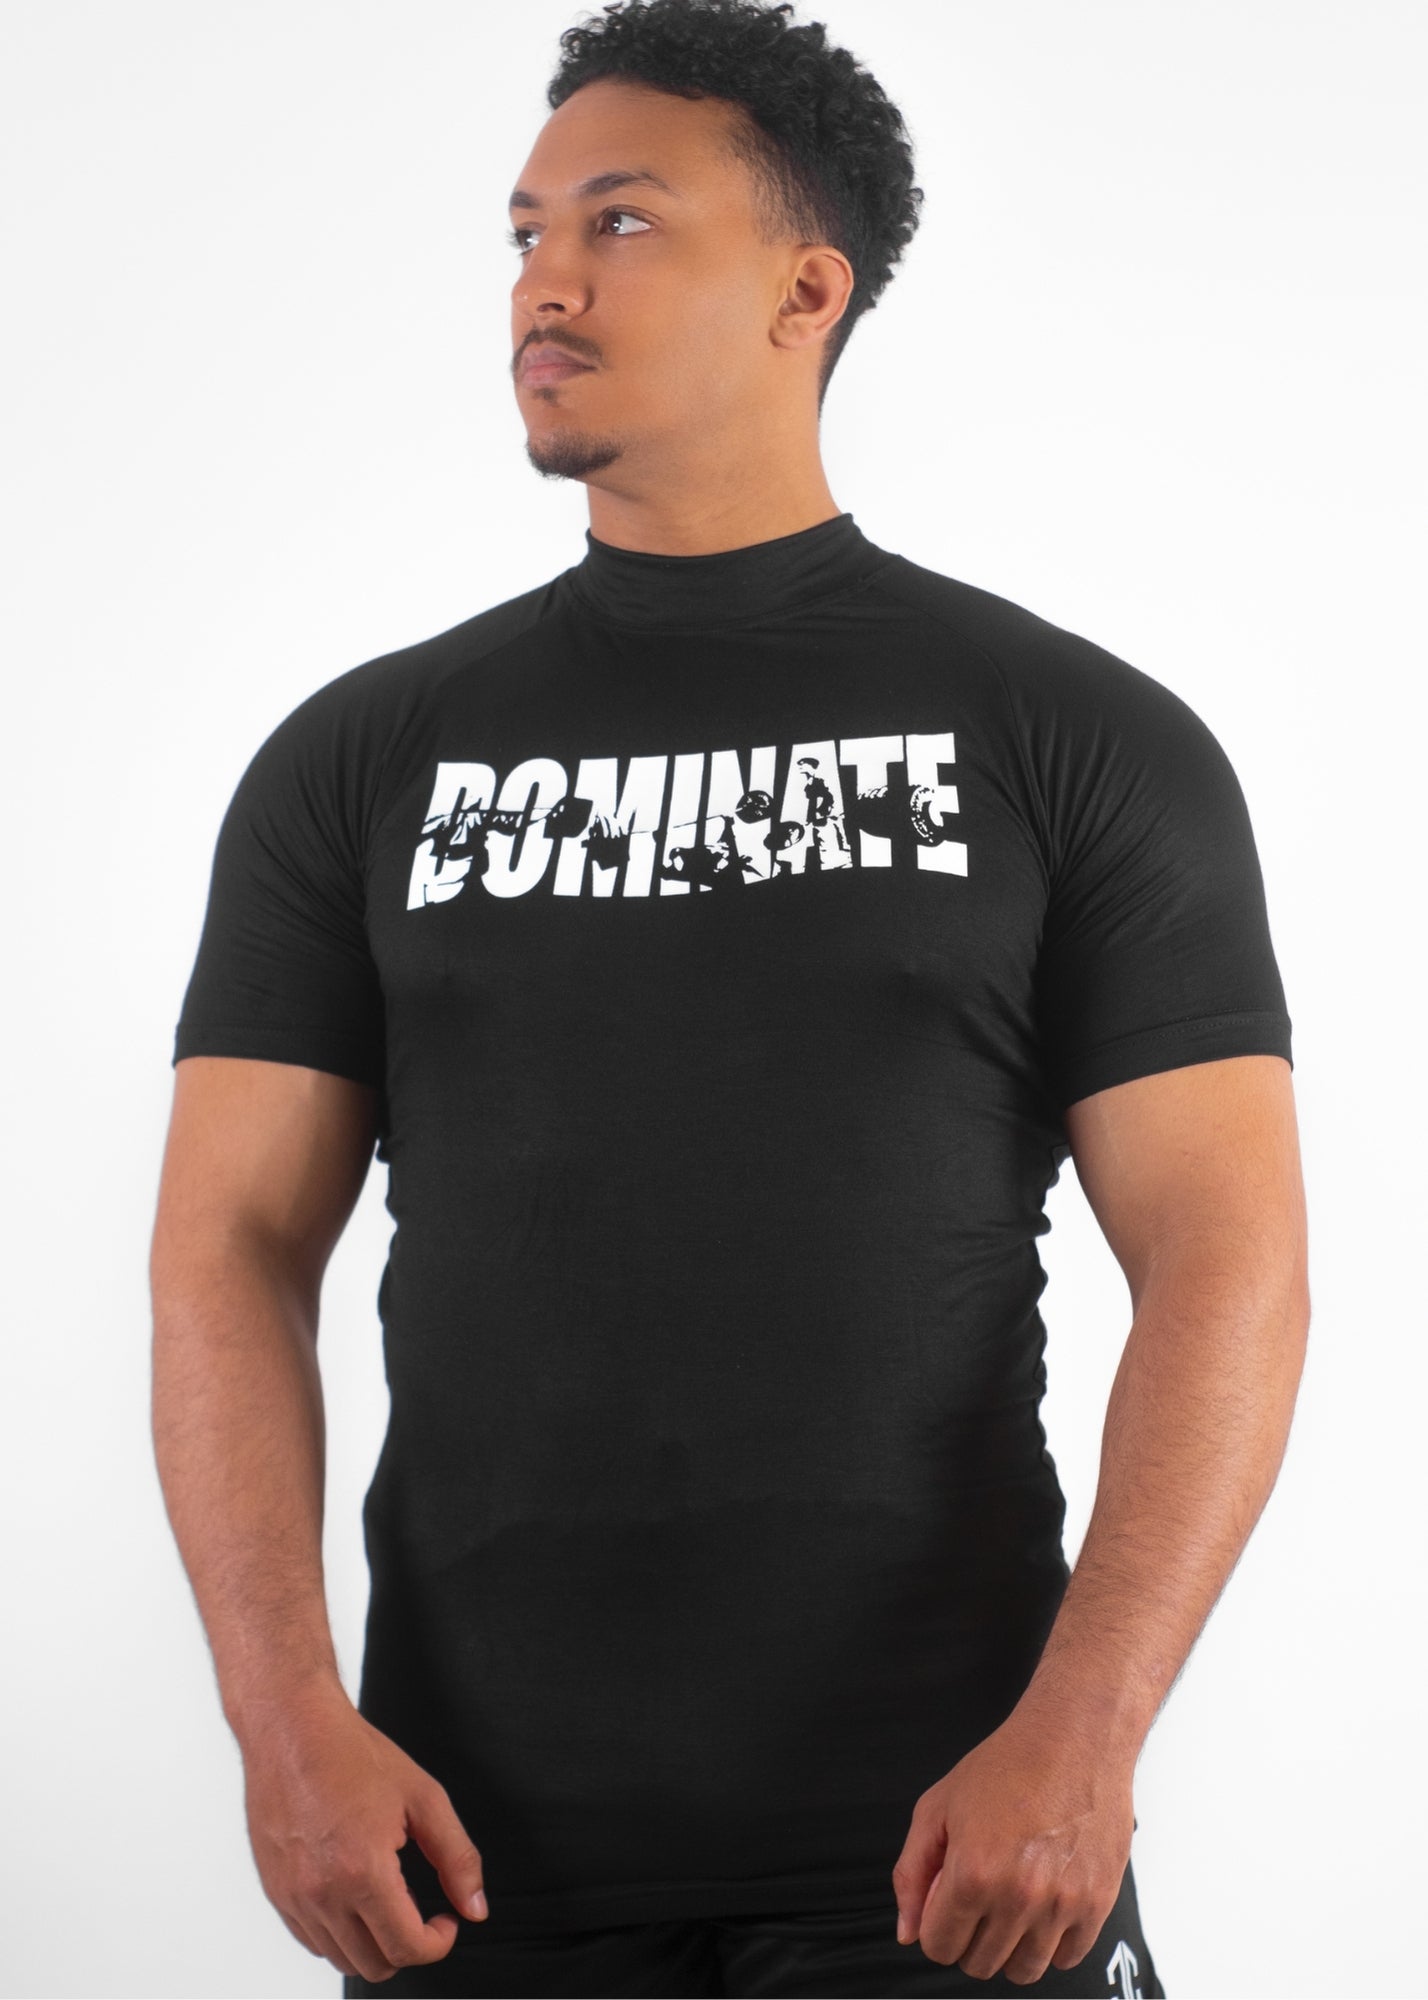 APEX™ Compression T-Shirt “DOMINATE” – BLACK